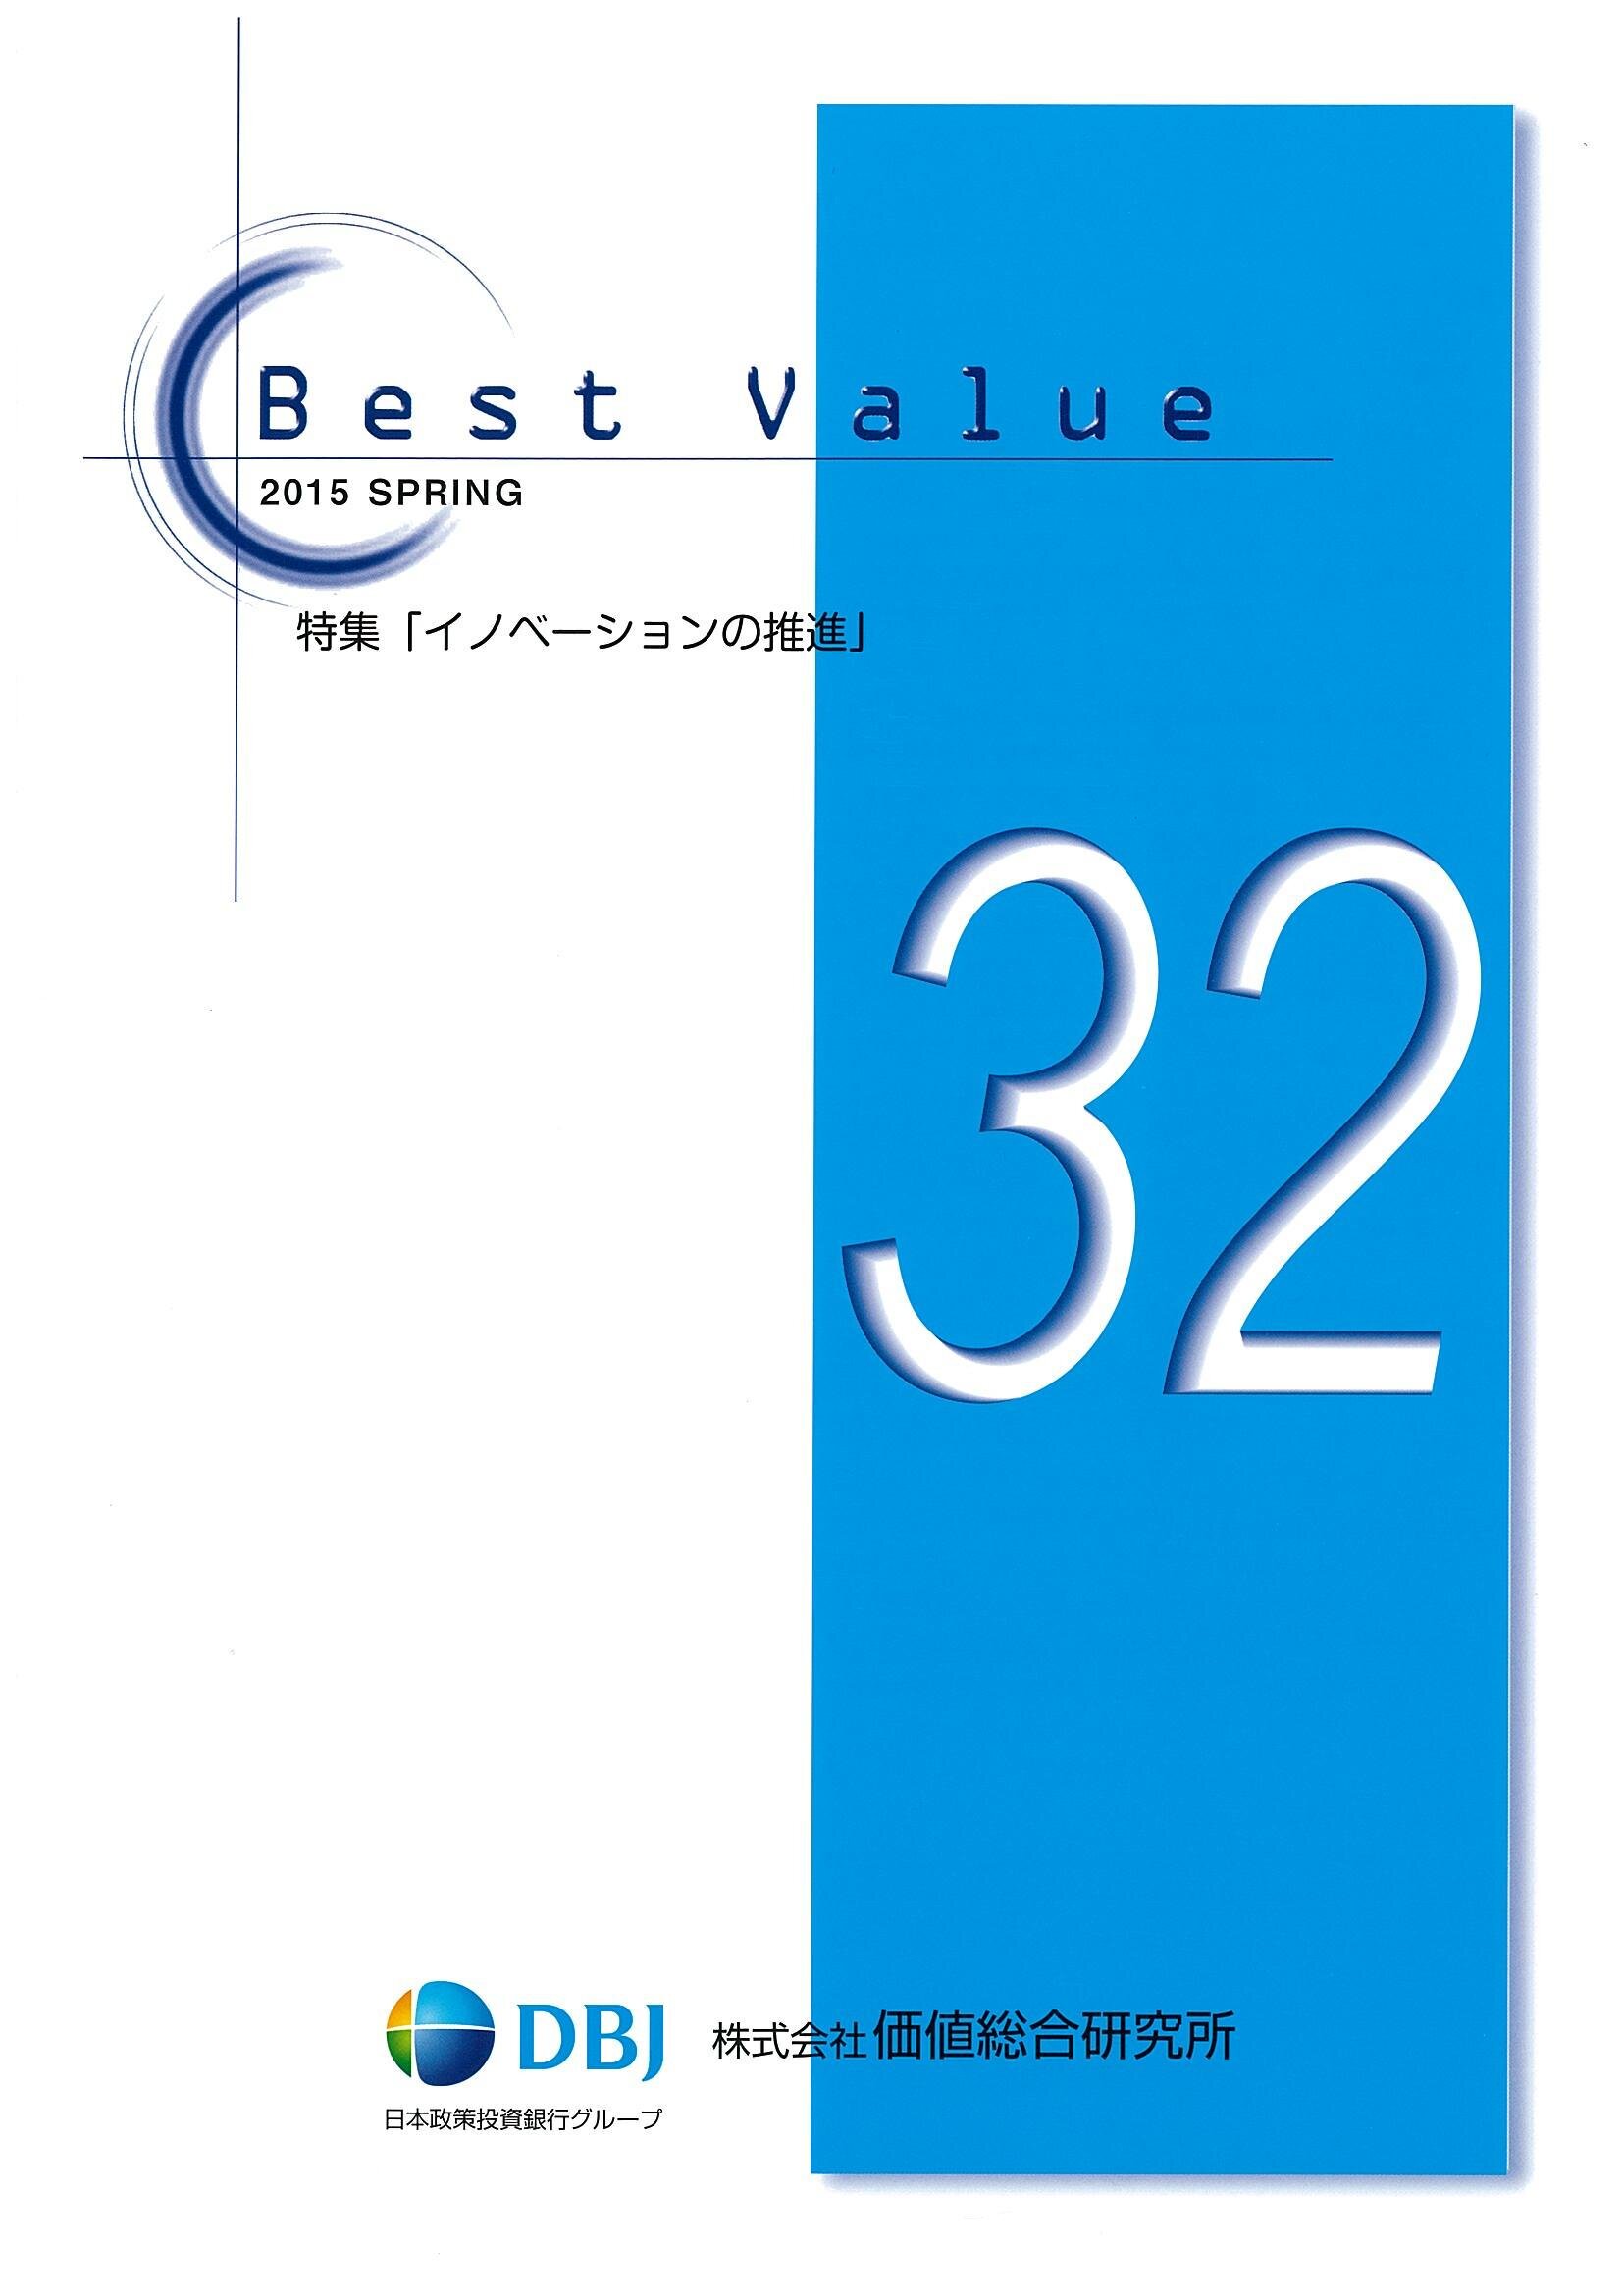 Best Value vol.32